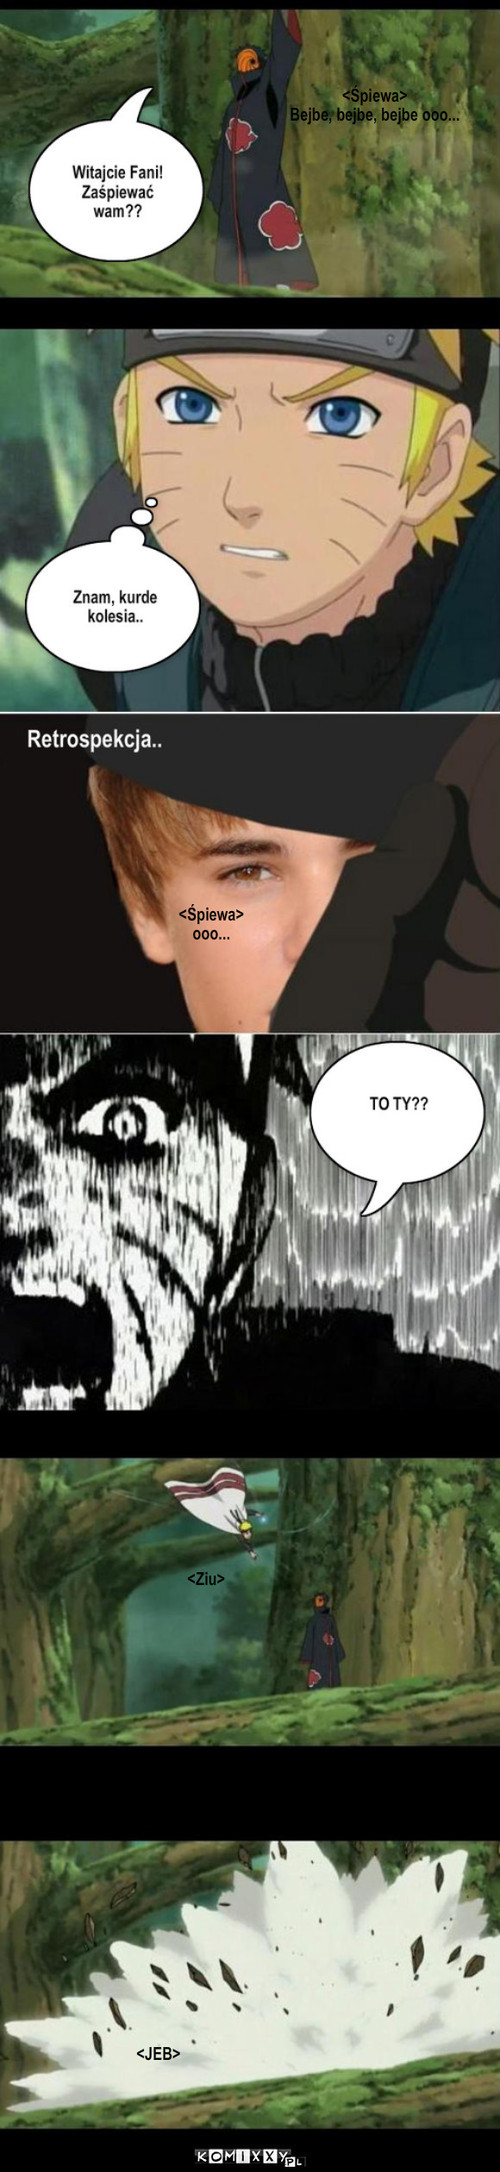 Bieber w Naruto – <Śpiewa>
Bejbe, bejbe, bejbe ooo... <Śpiewa>
ooo... <Ziu> <JEB> 